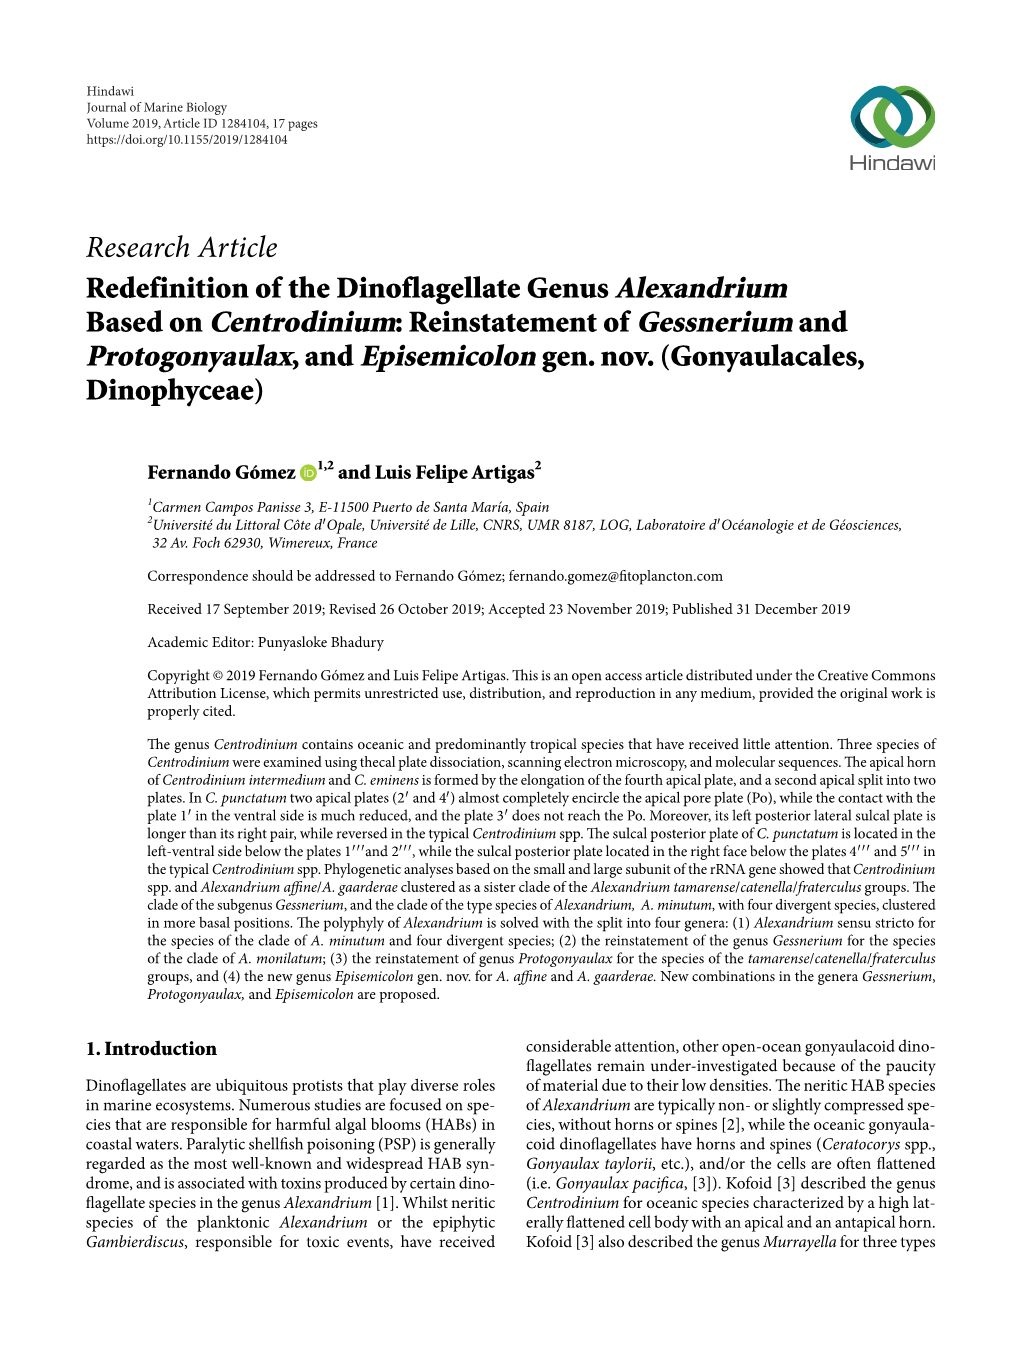 Redefinition of the Dinoflagellate Genus Alexandrium Based on Centrodinium: Reinstatement of Gessnerium and Protogonyaulax, and Episemicolon Gen